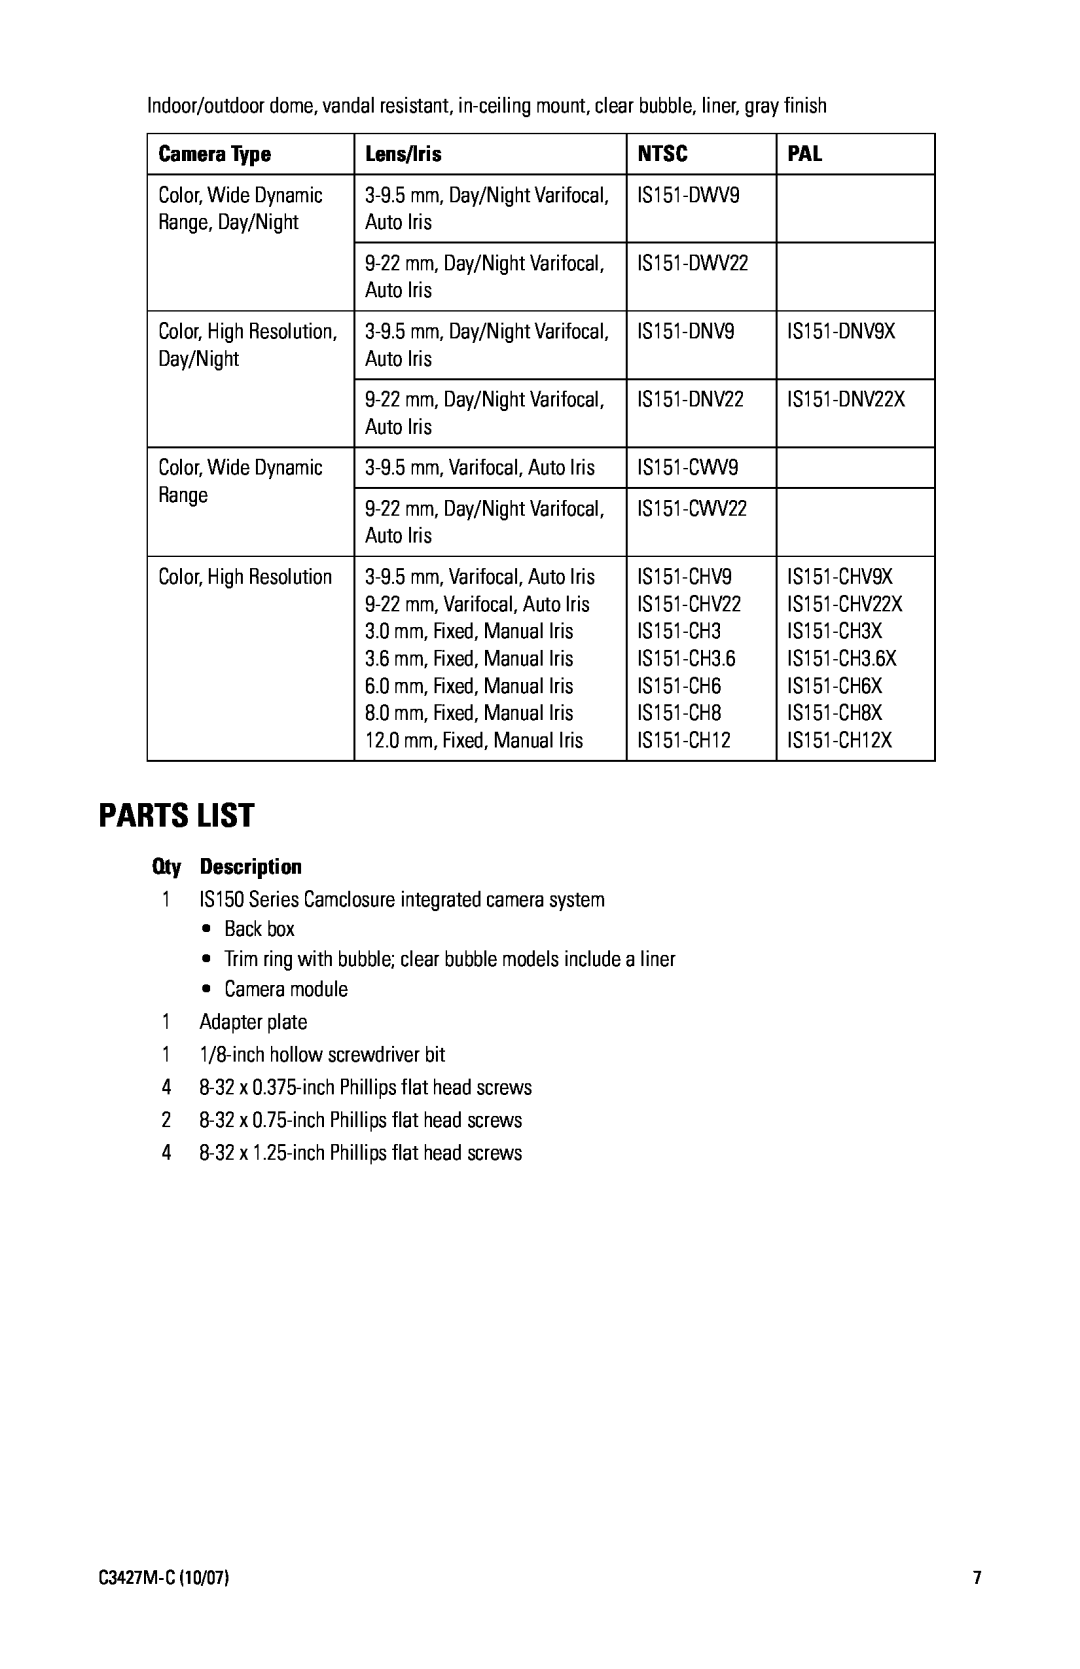 Pelco IS150 manual Parts List, Qty Description, Camera Type, Lens/Iris, Ntsc 